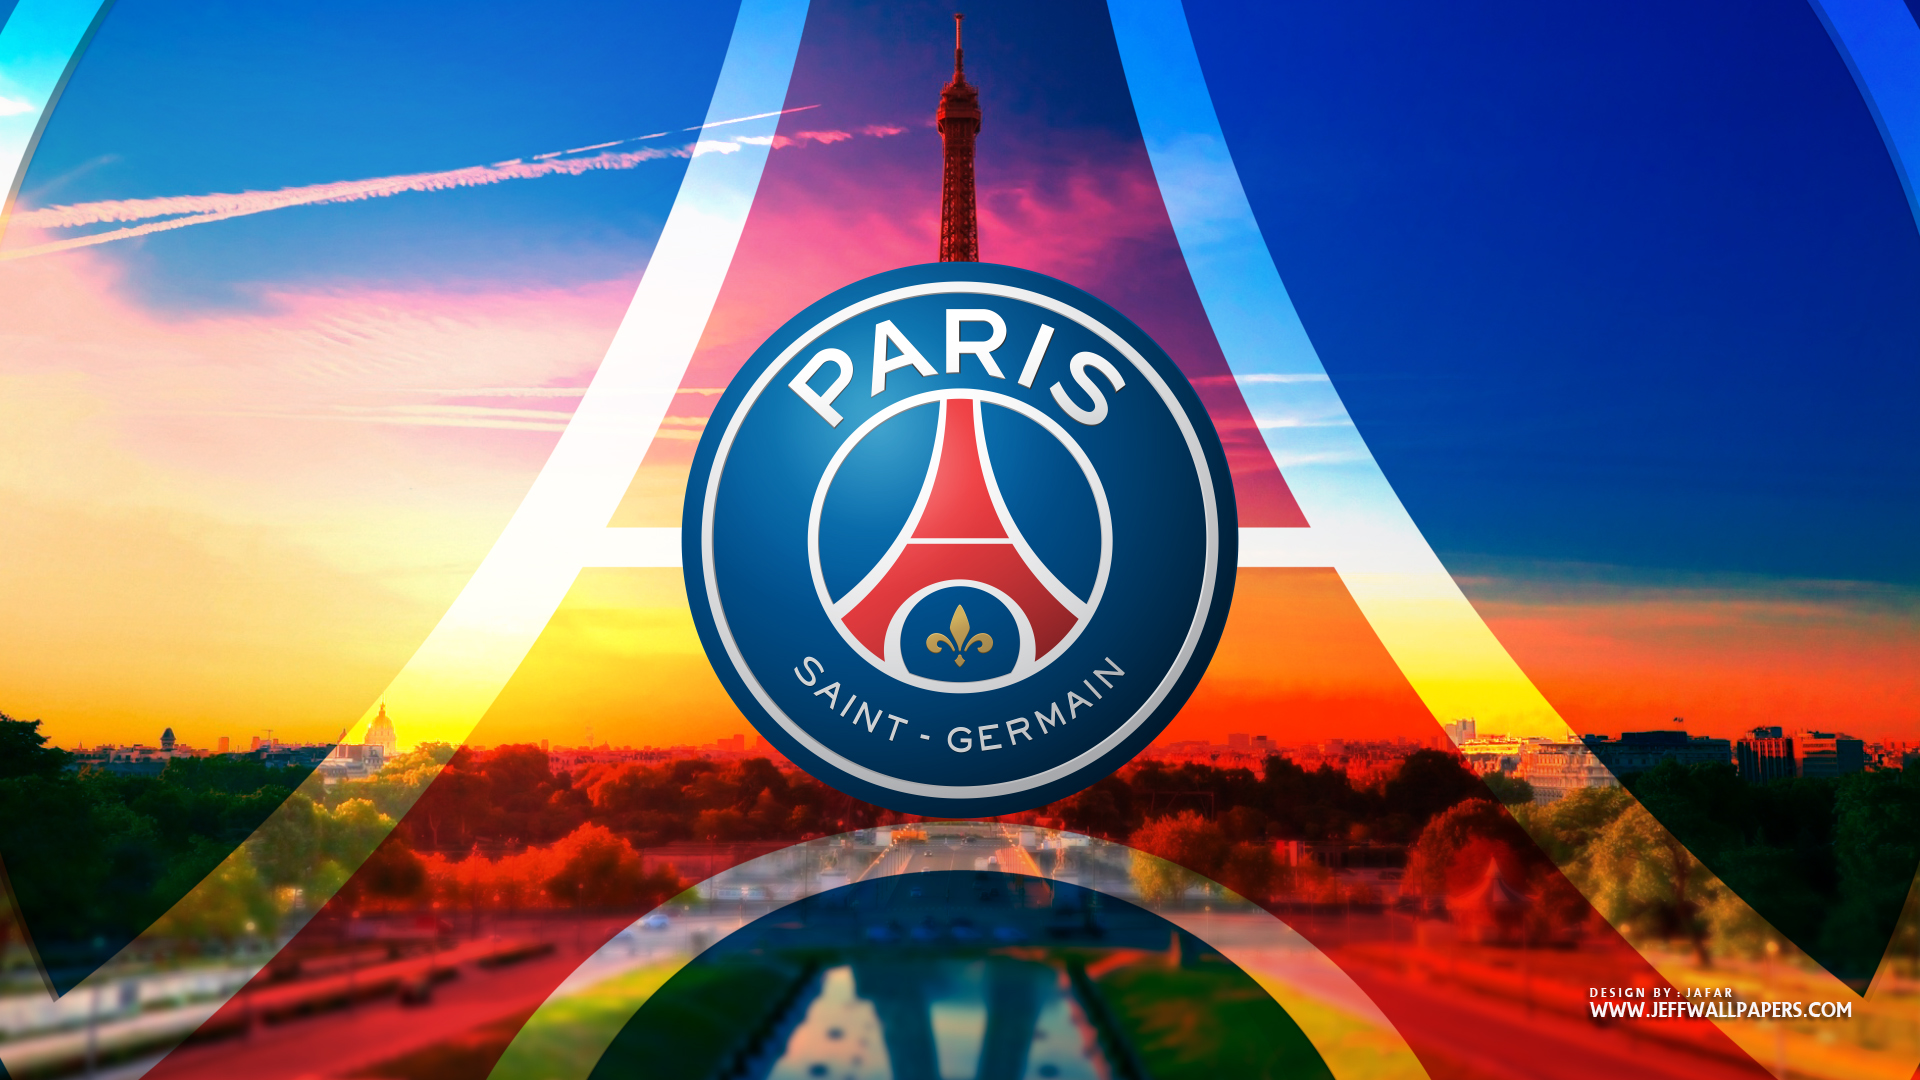 paris saint germain f c, sports, crest, emblem, logo, soccer, symbol